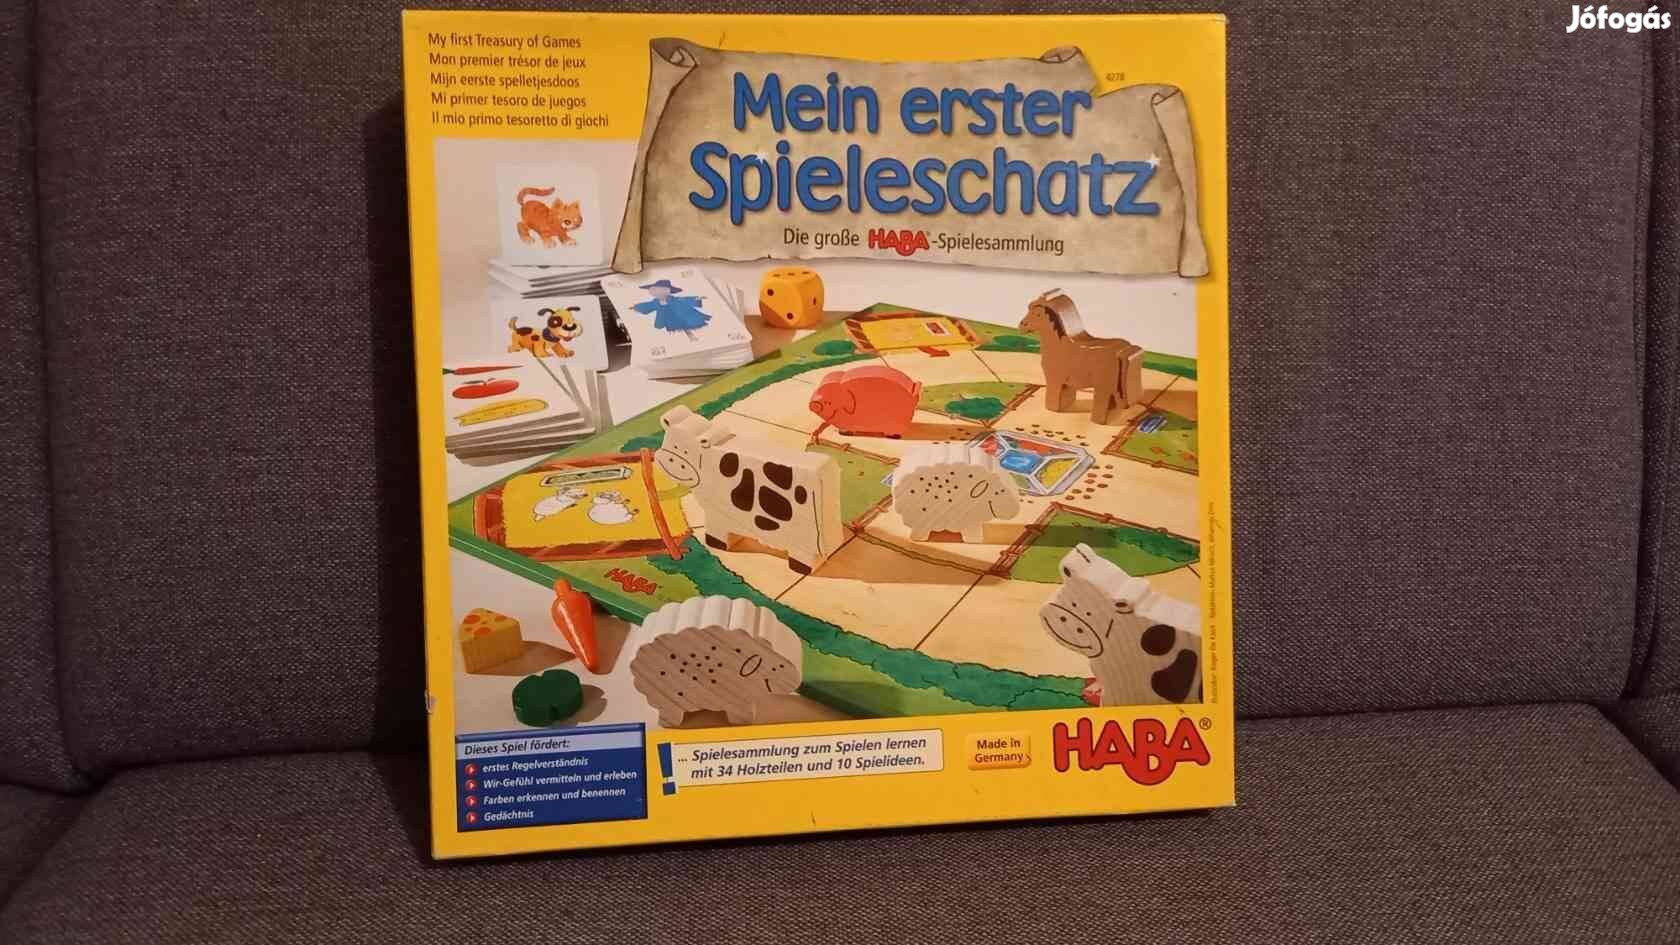 HABA Mein Ersteer Spieleschatz társasjáték